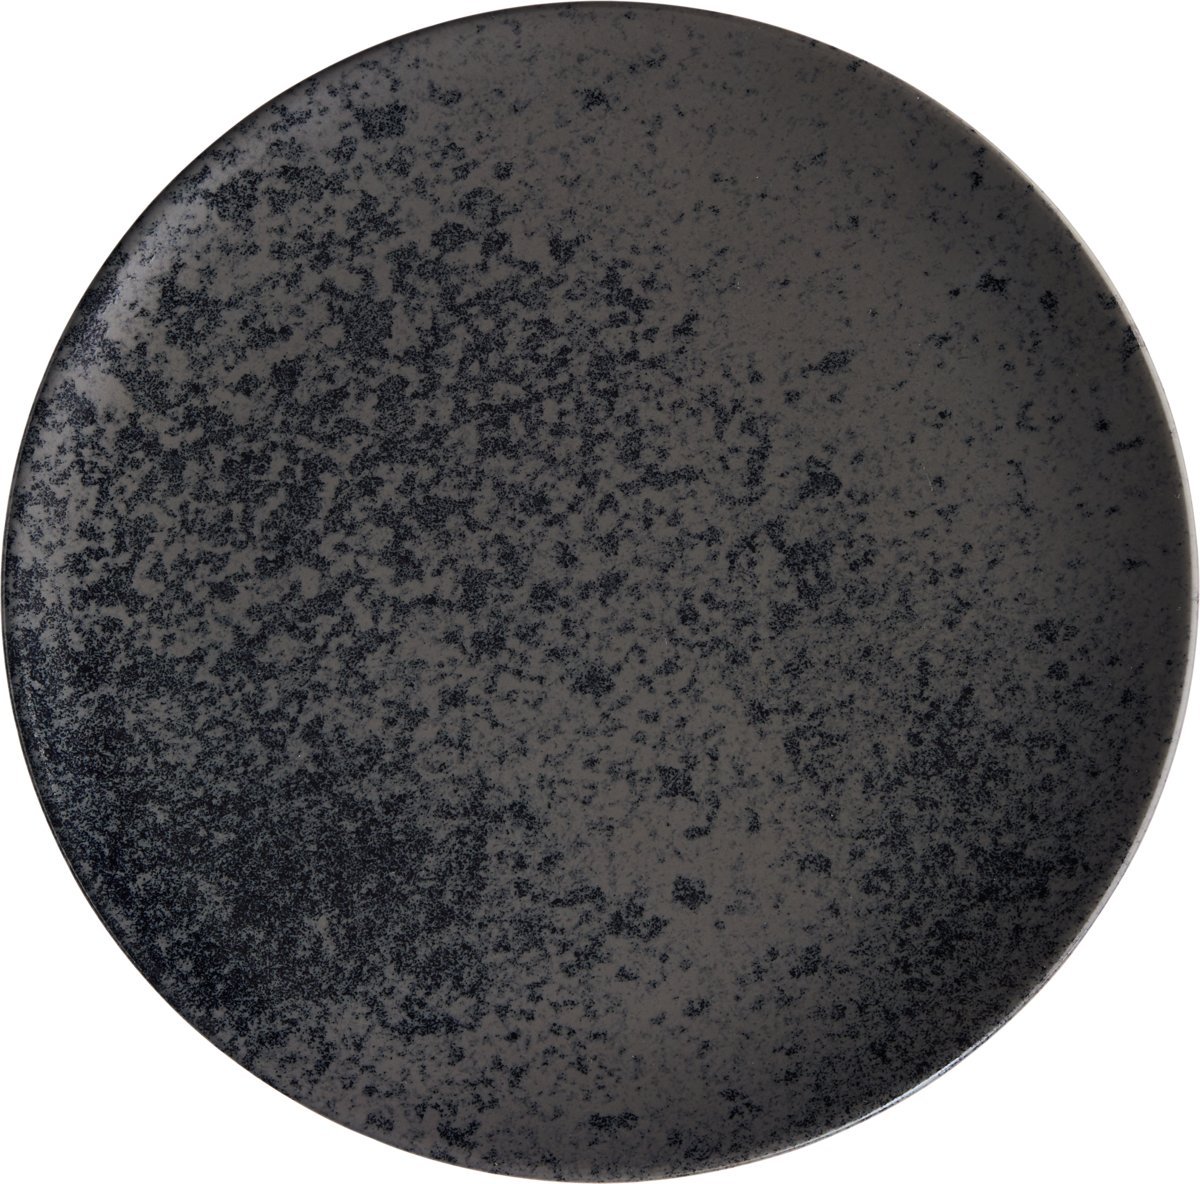 SANDSTONE BLACK PLATE FLAT COUP 28cm PORCELAINE Bauscher GERMANY